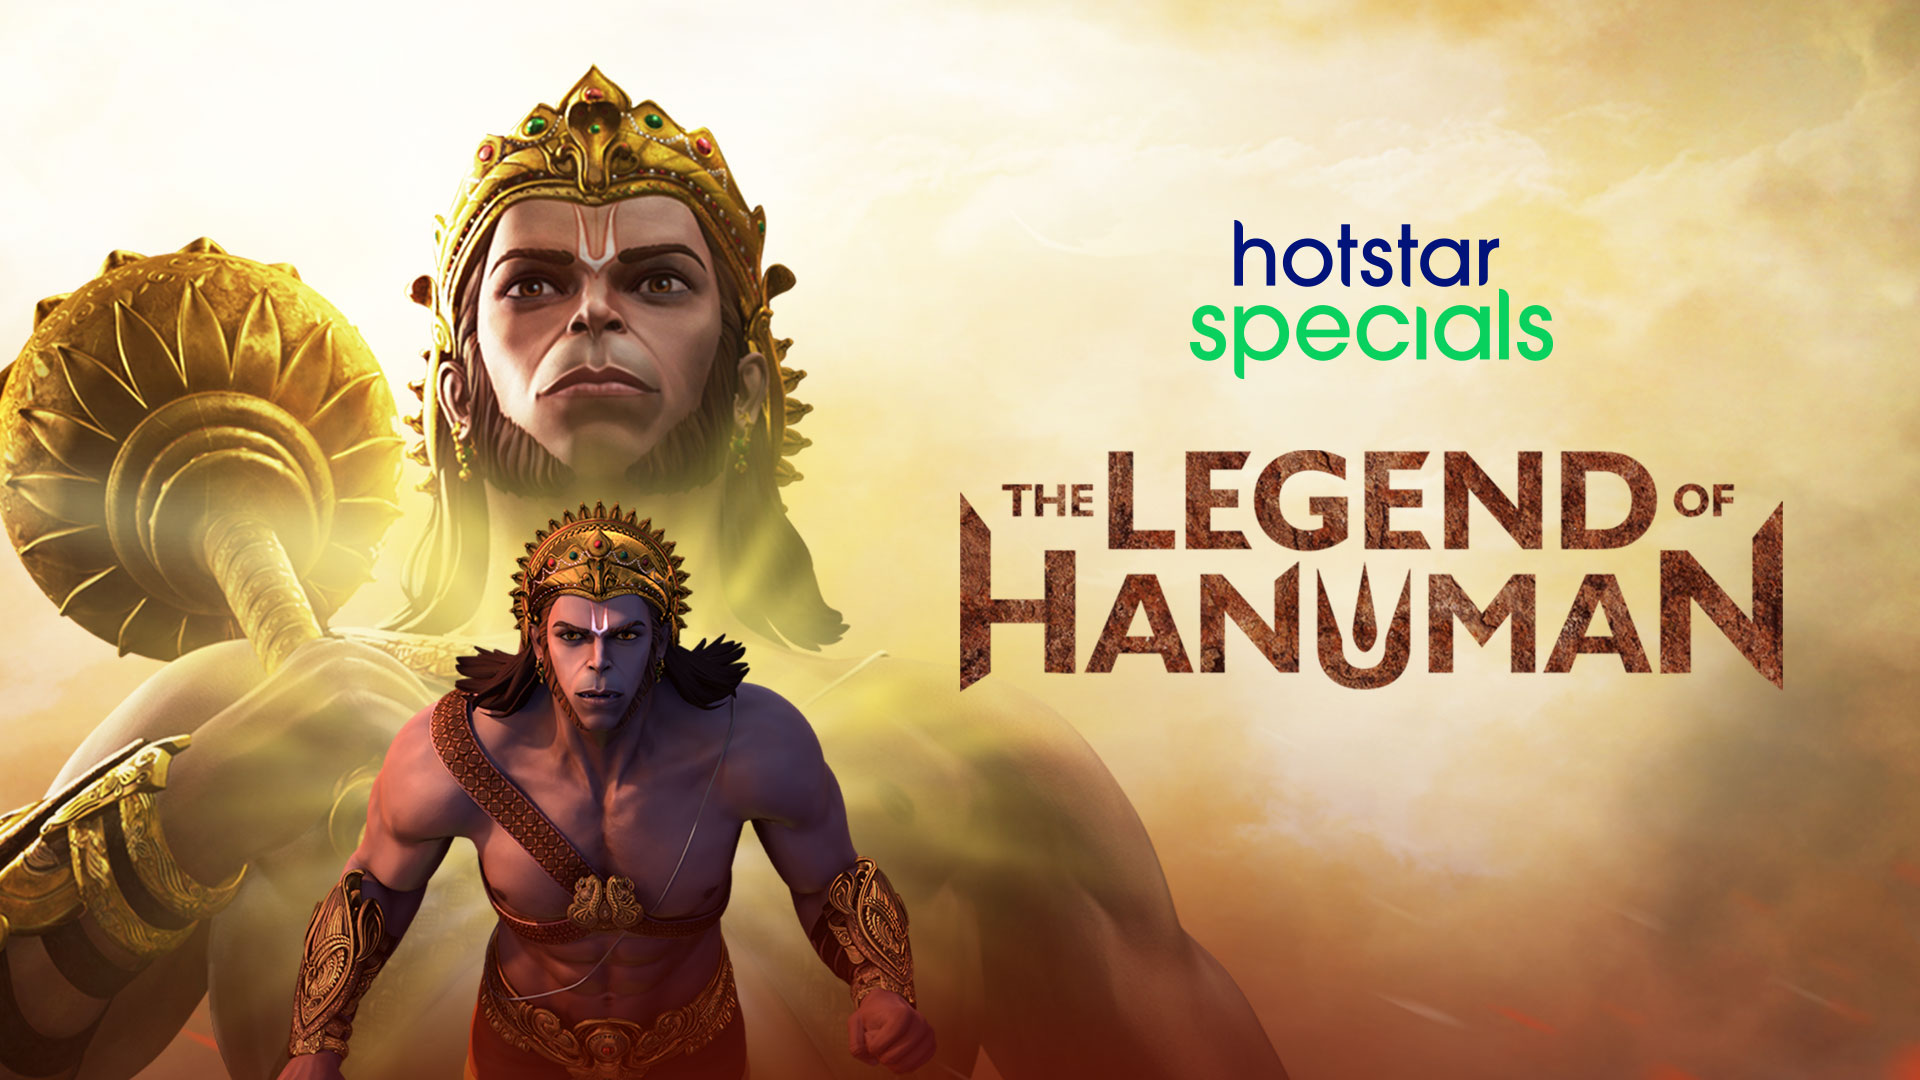 The Legend of Hanuman - Disney+ Hotstar